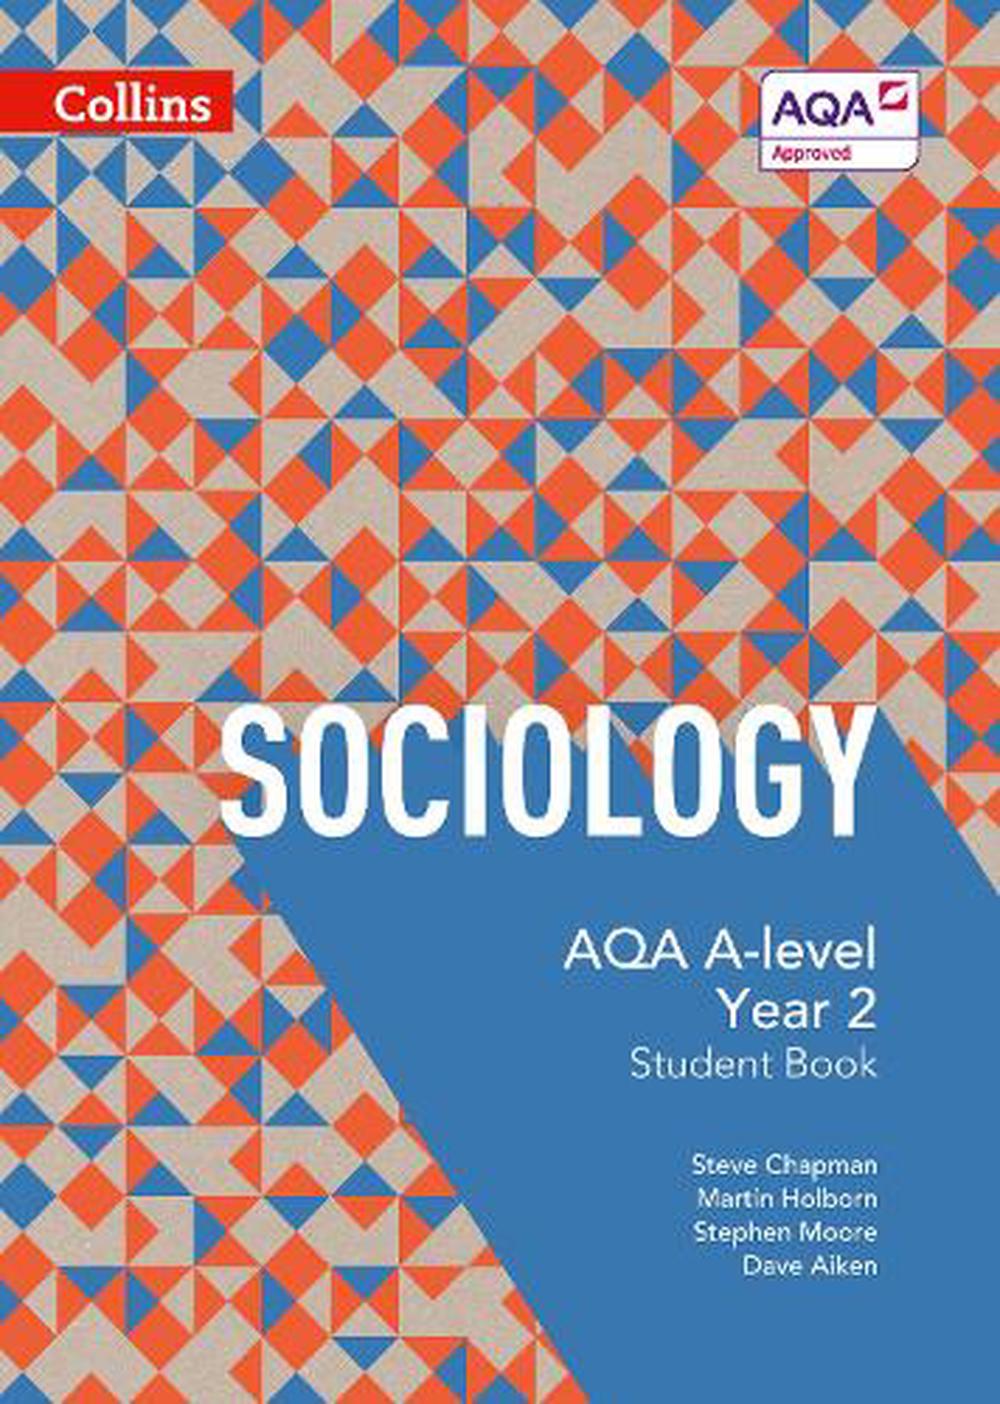 sociology paper 2 aqa